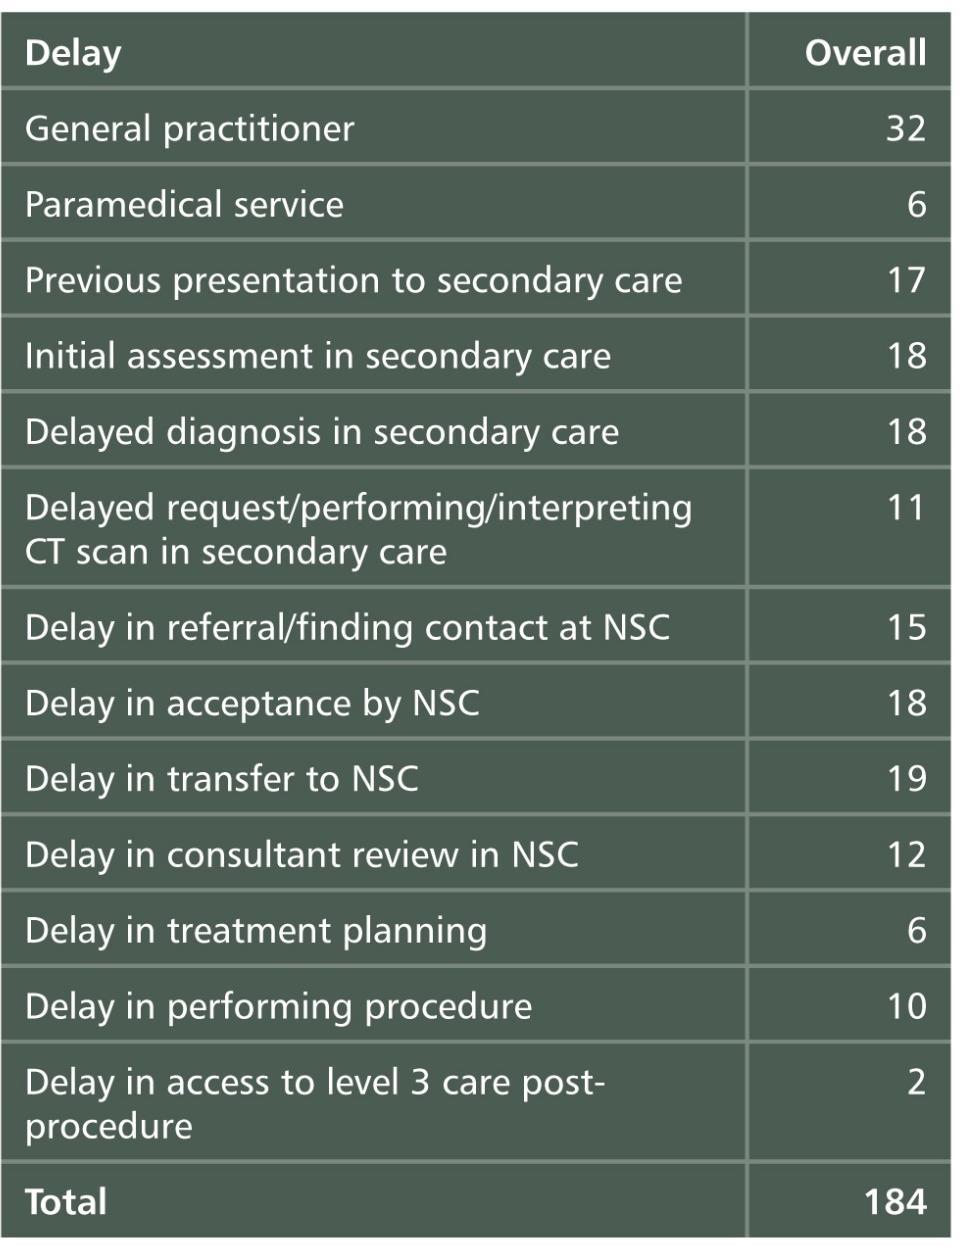 Summary: Delays First Delay 20% 184 patients suffered a delay 68 patients had